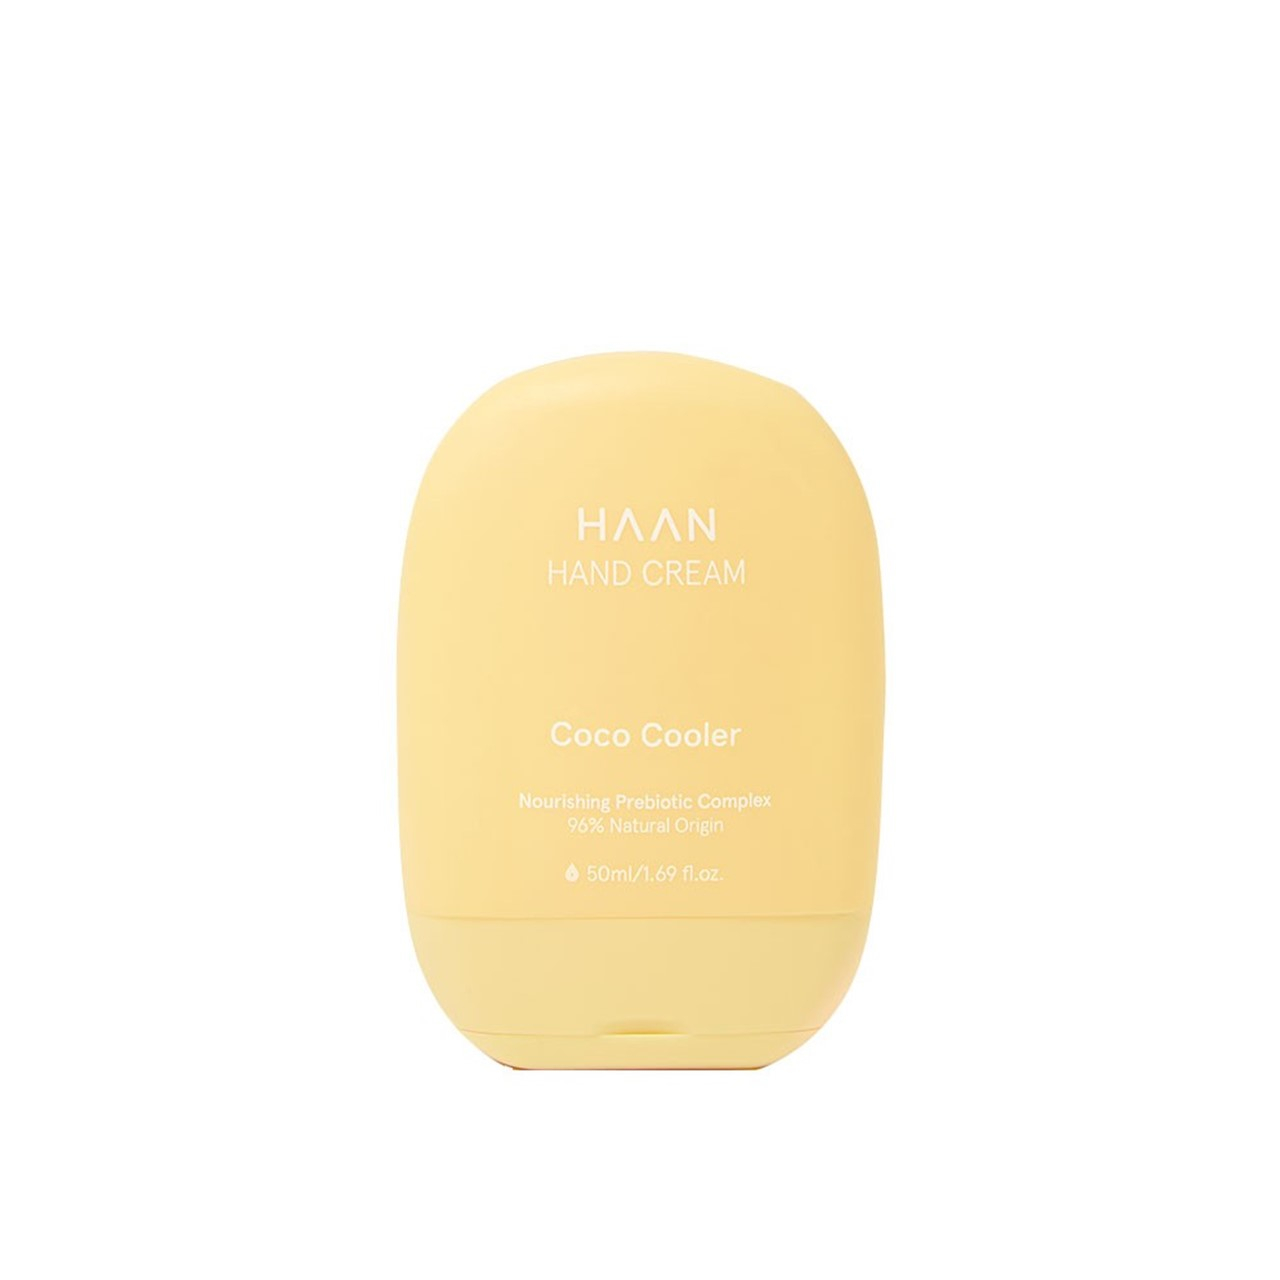 HAAN Coco Cooler Hand Cream 50ml (1.69fl oz)